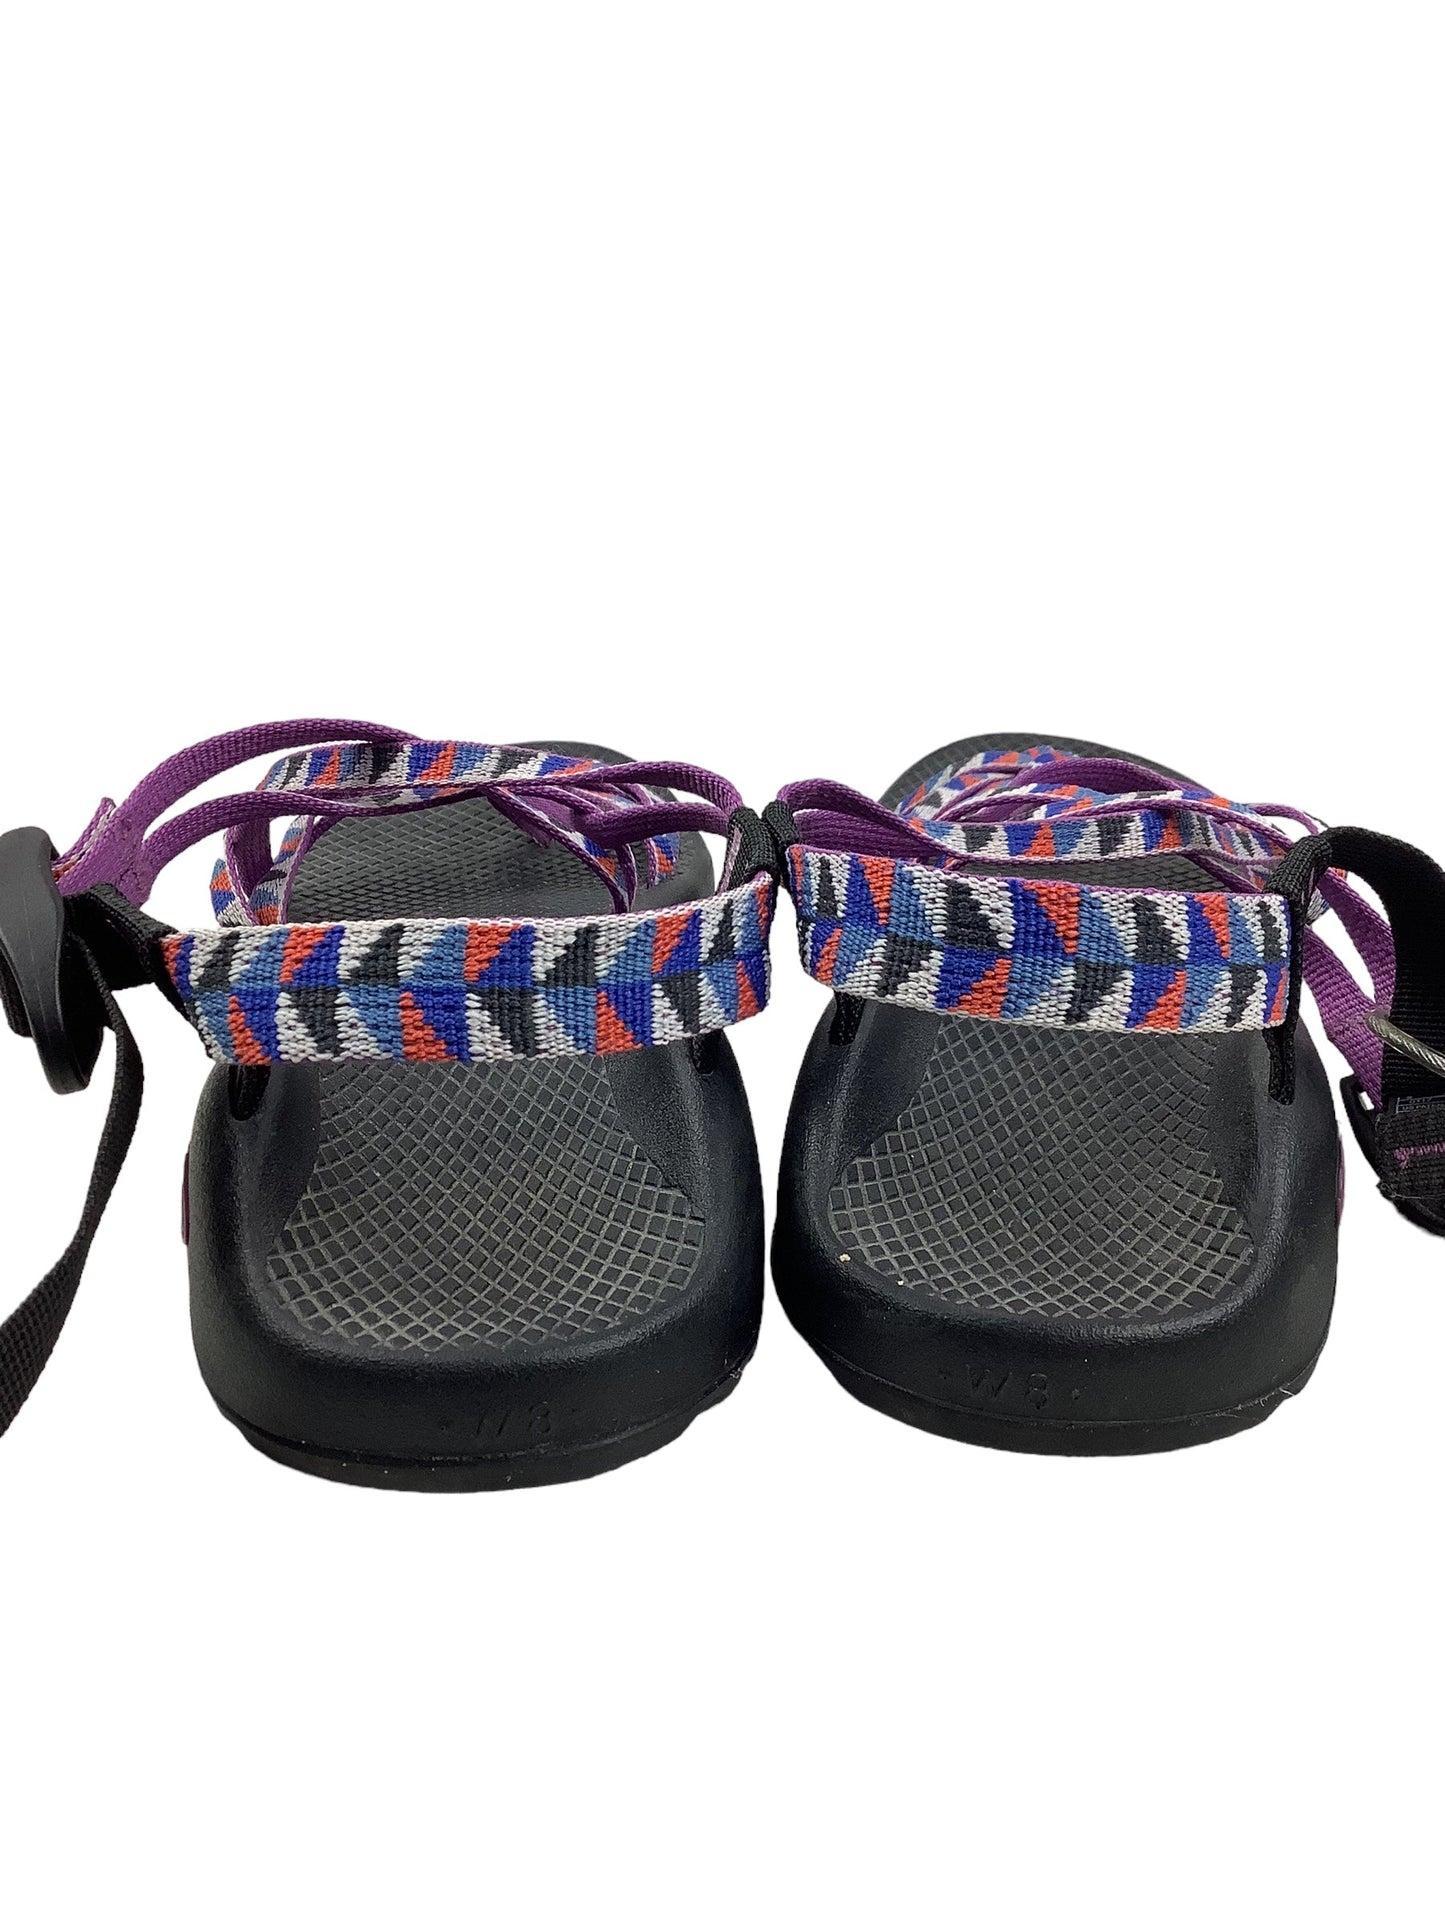 Purple Sandals Sport Chacos, Size 8